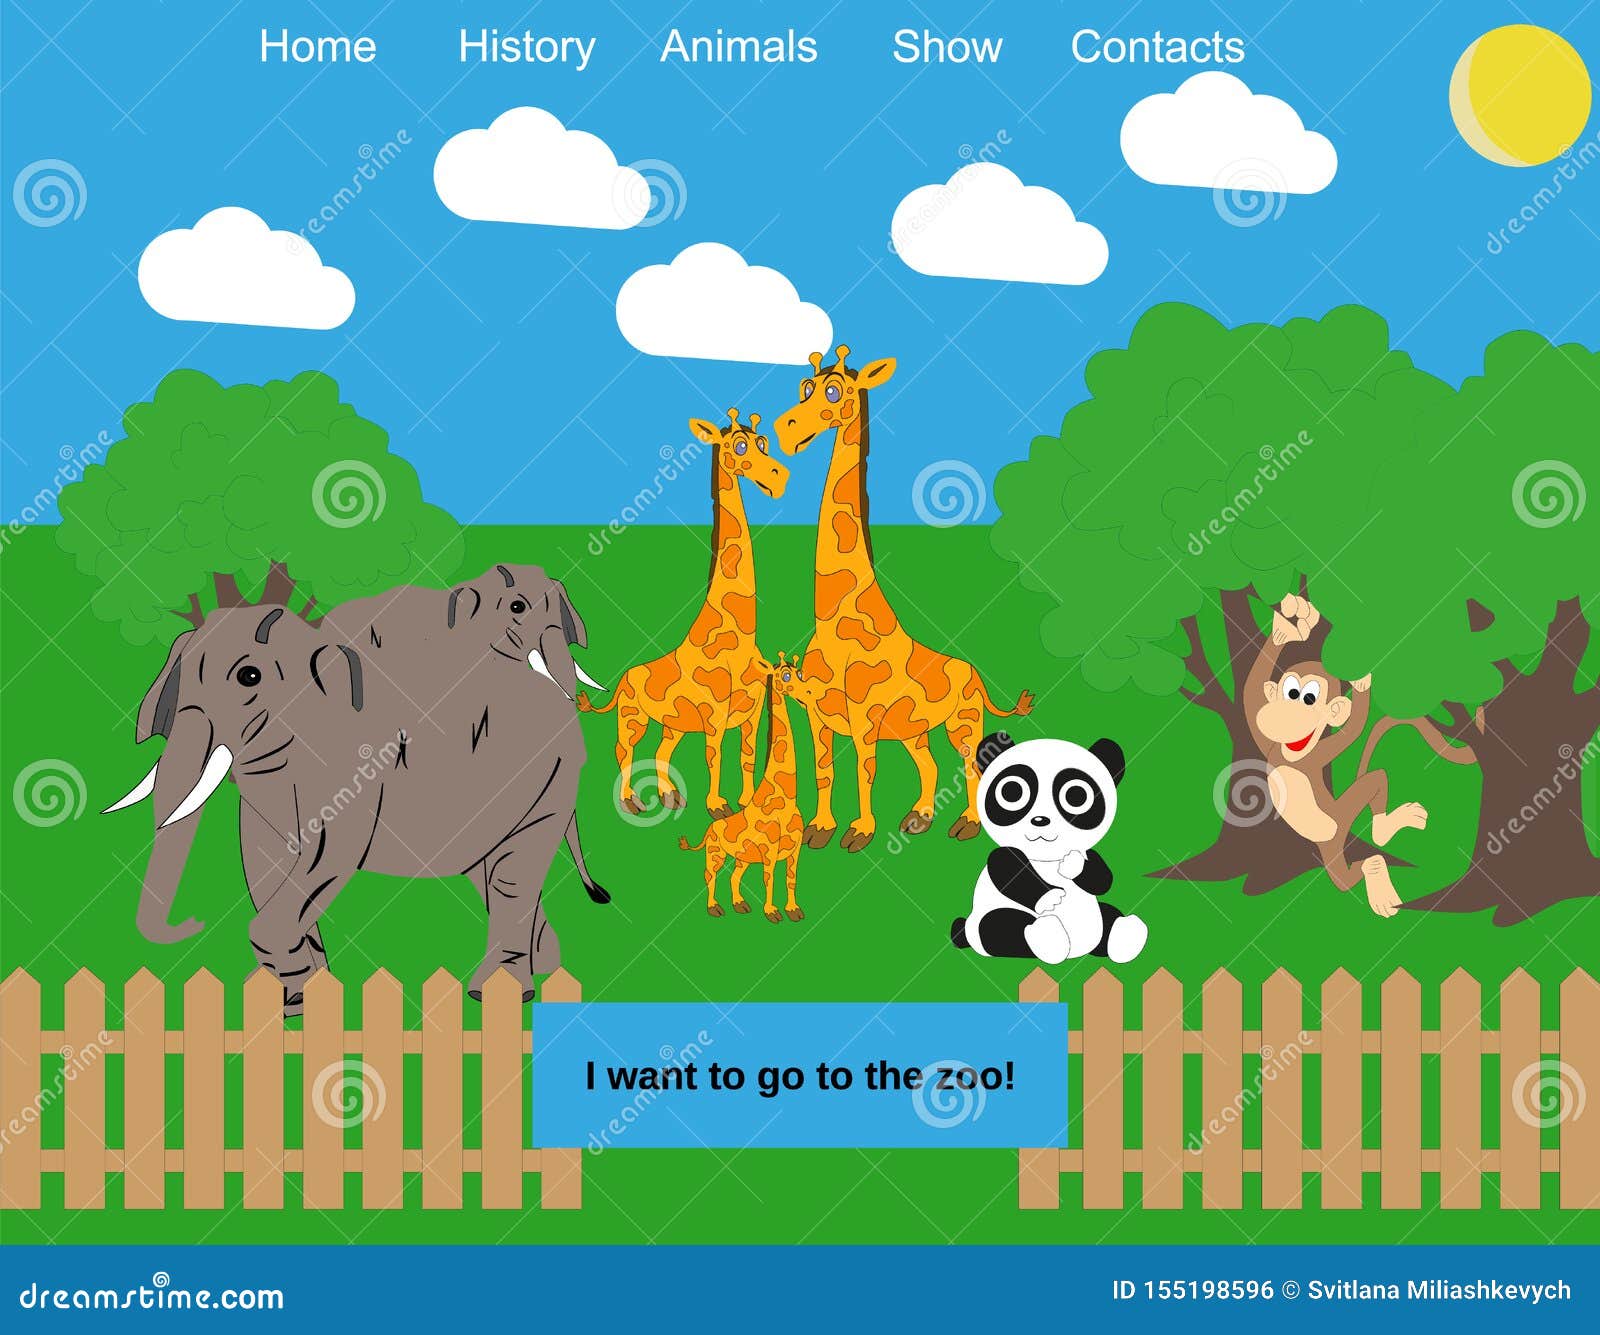 Zoo website layout stock illustration. Illustration of four - 155198596